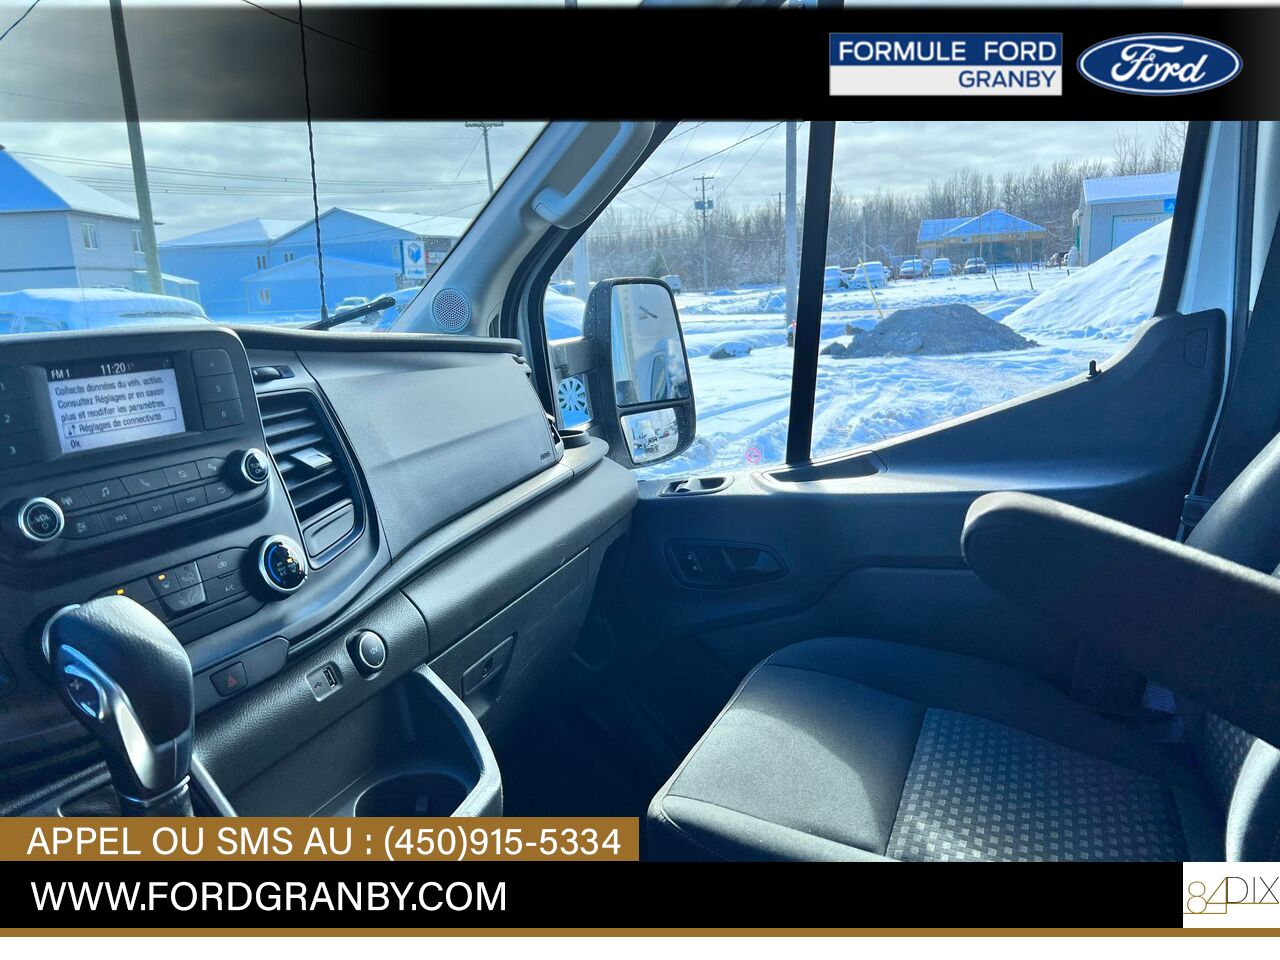 Ford Transit fourgon tronqué 2020 Granby - photo #15